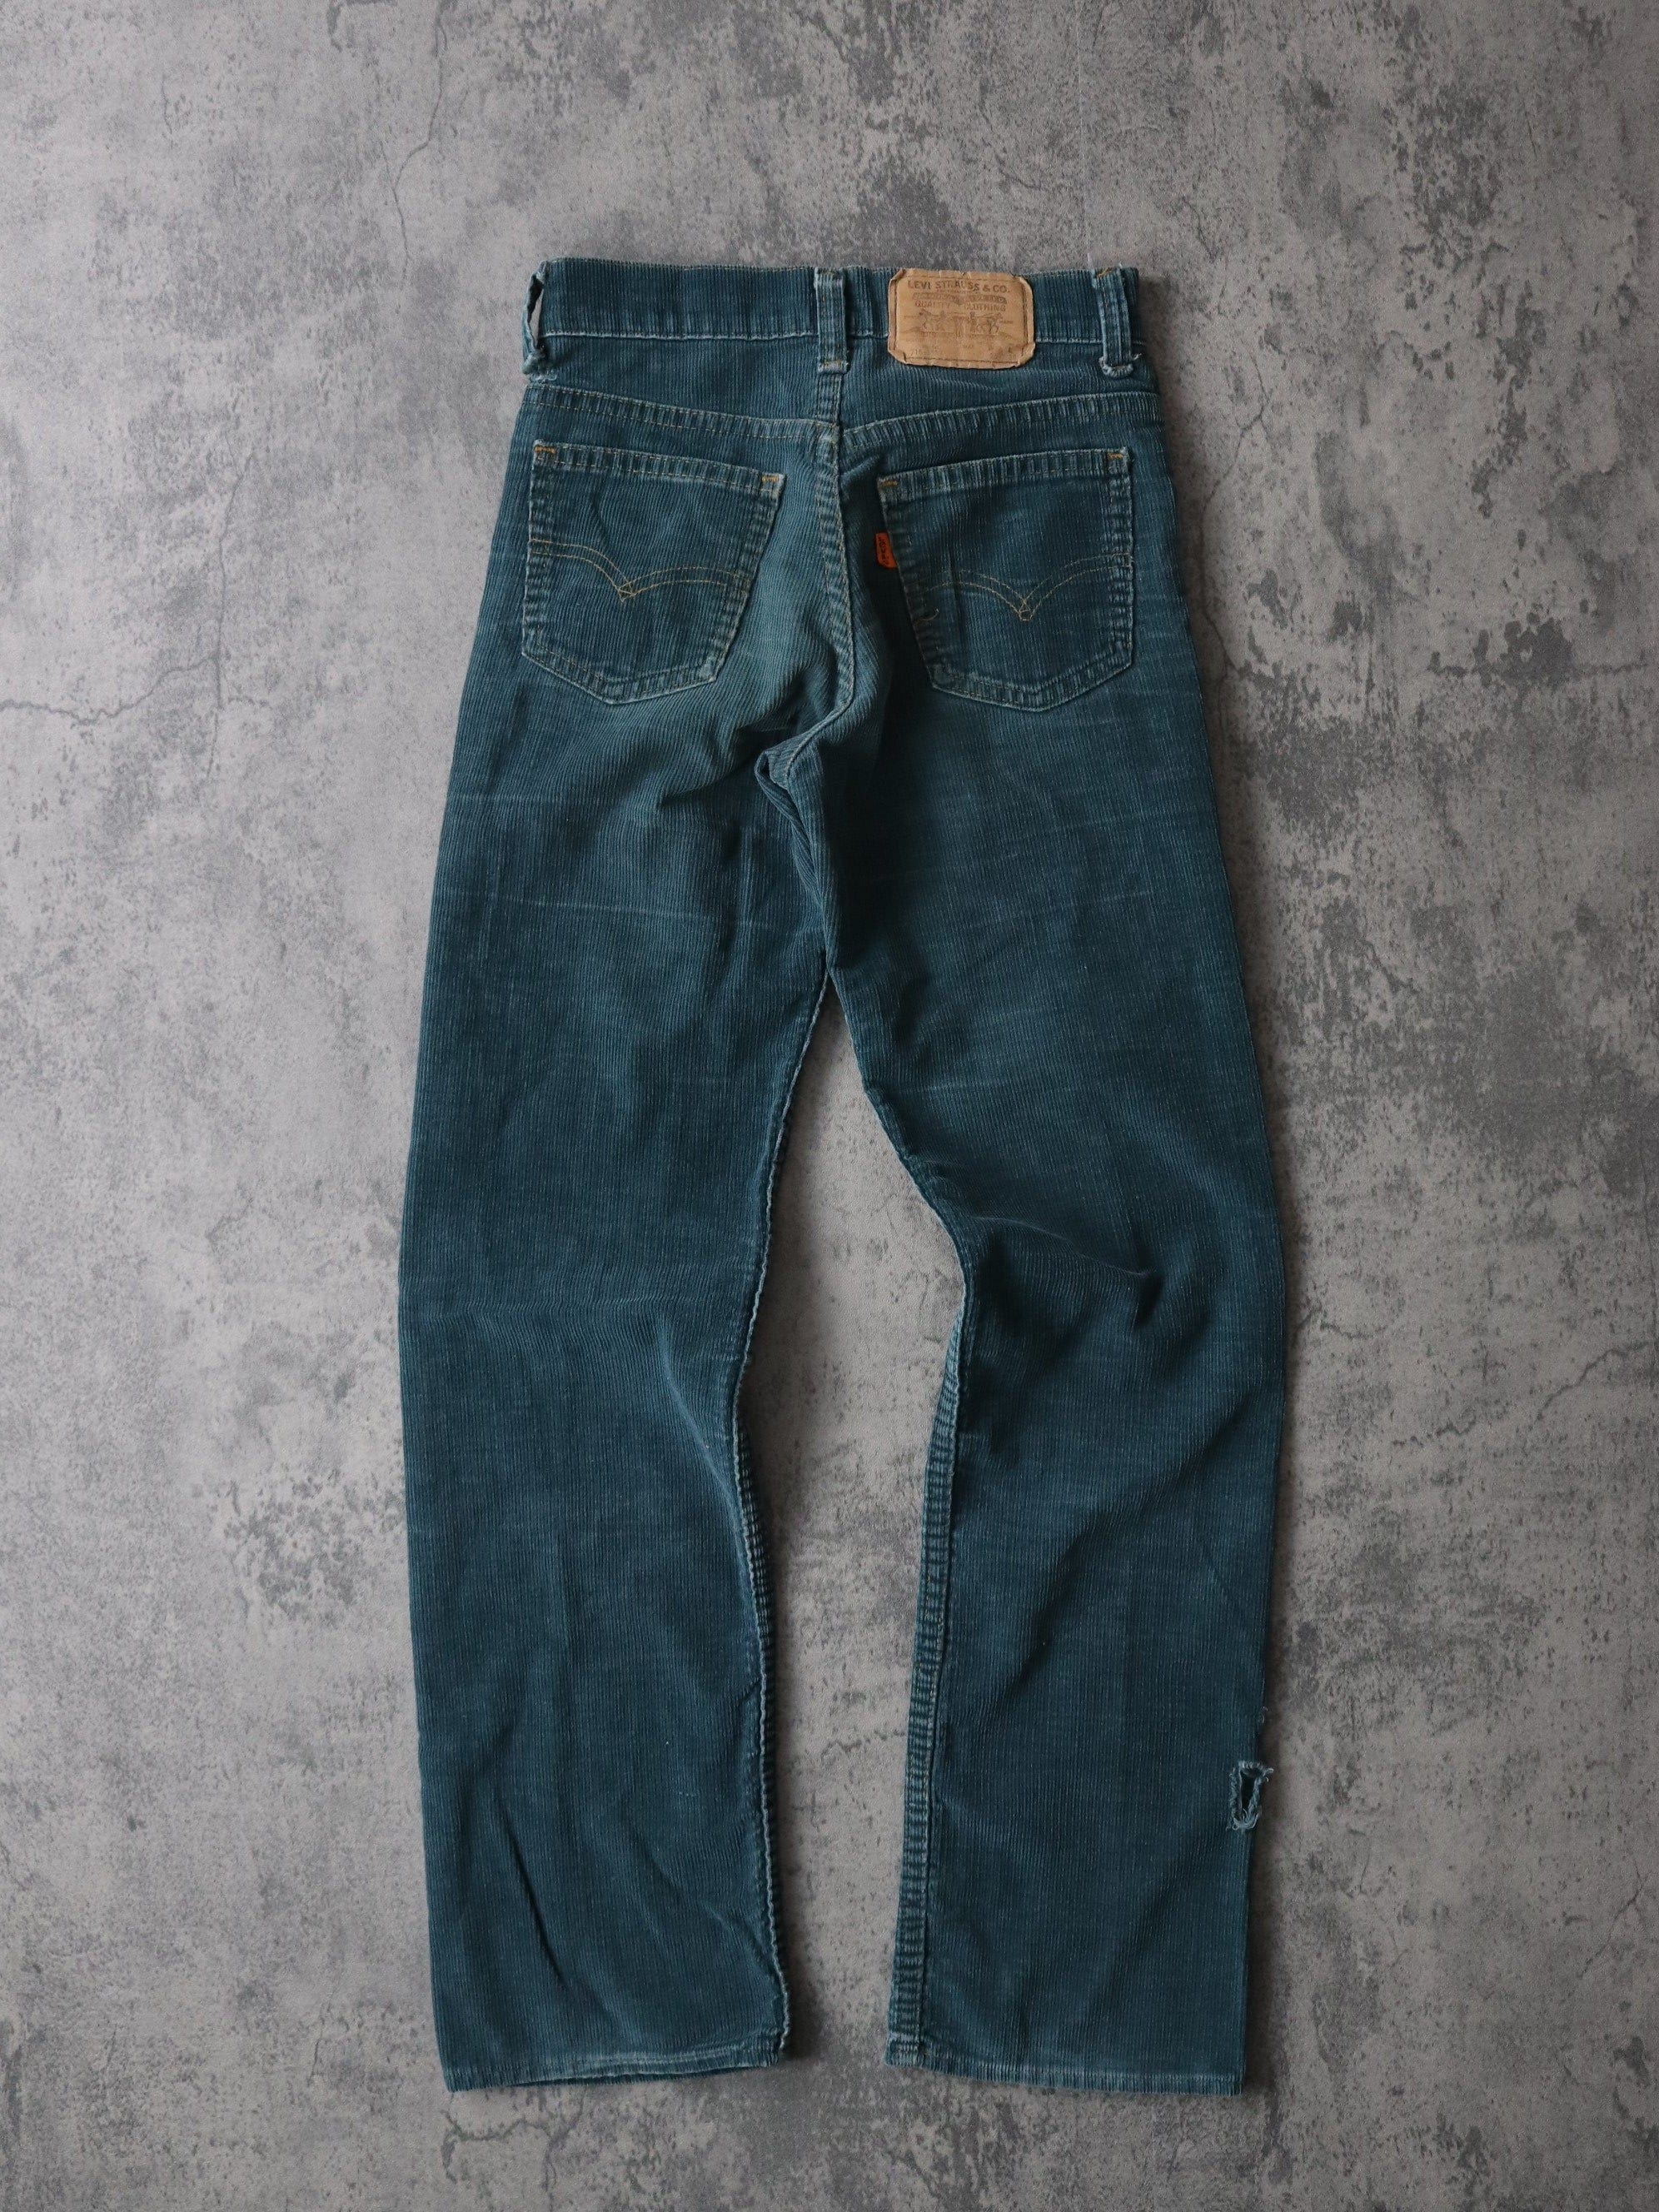 Vintage Levi's Pants Fits Womens 25 x 29 Green Corduroy 80s Talon Zip –  Proper Vintage